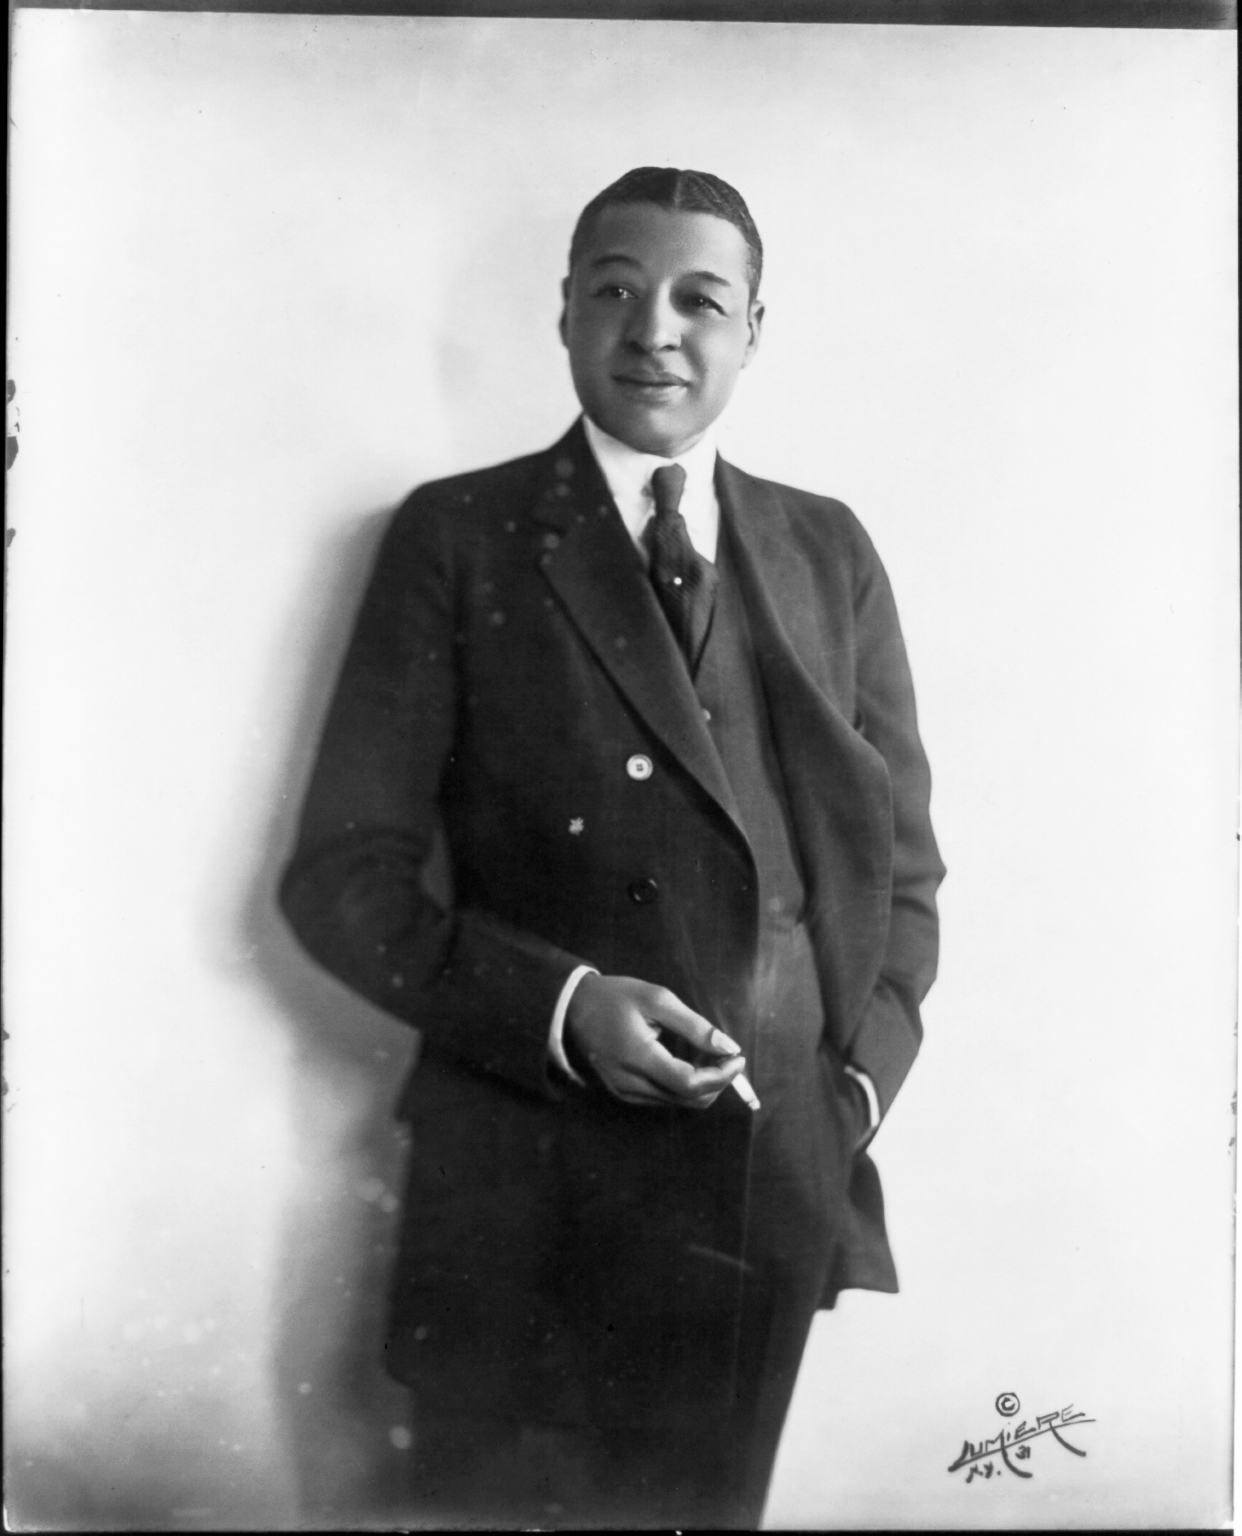 Portrait of a Black man in an elegant suit, cigarette in hand.